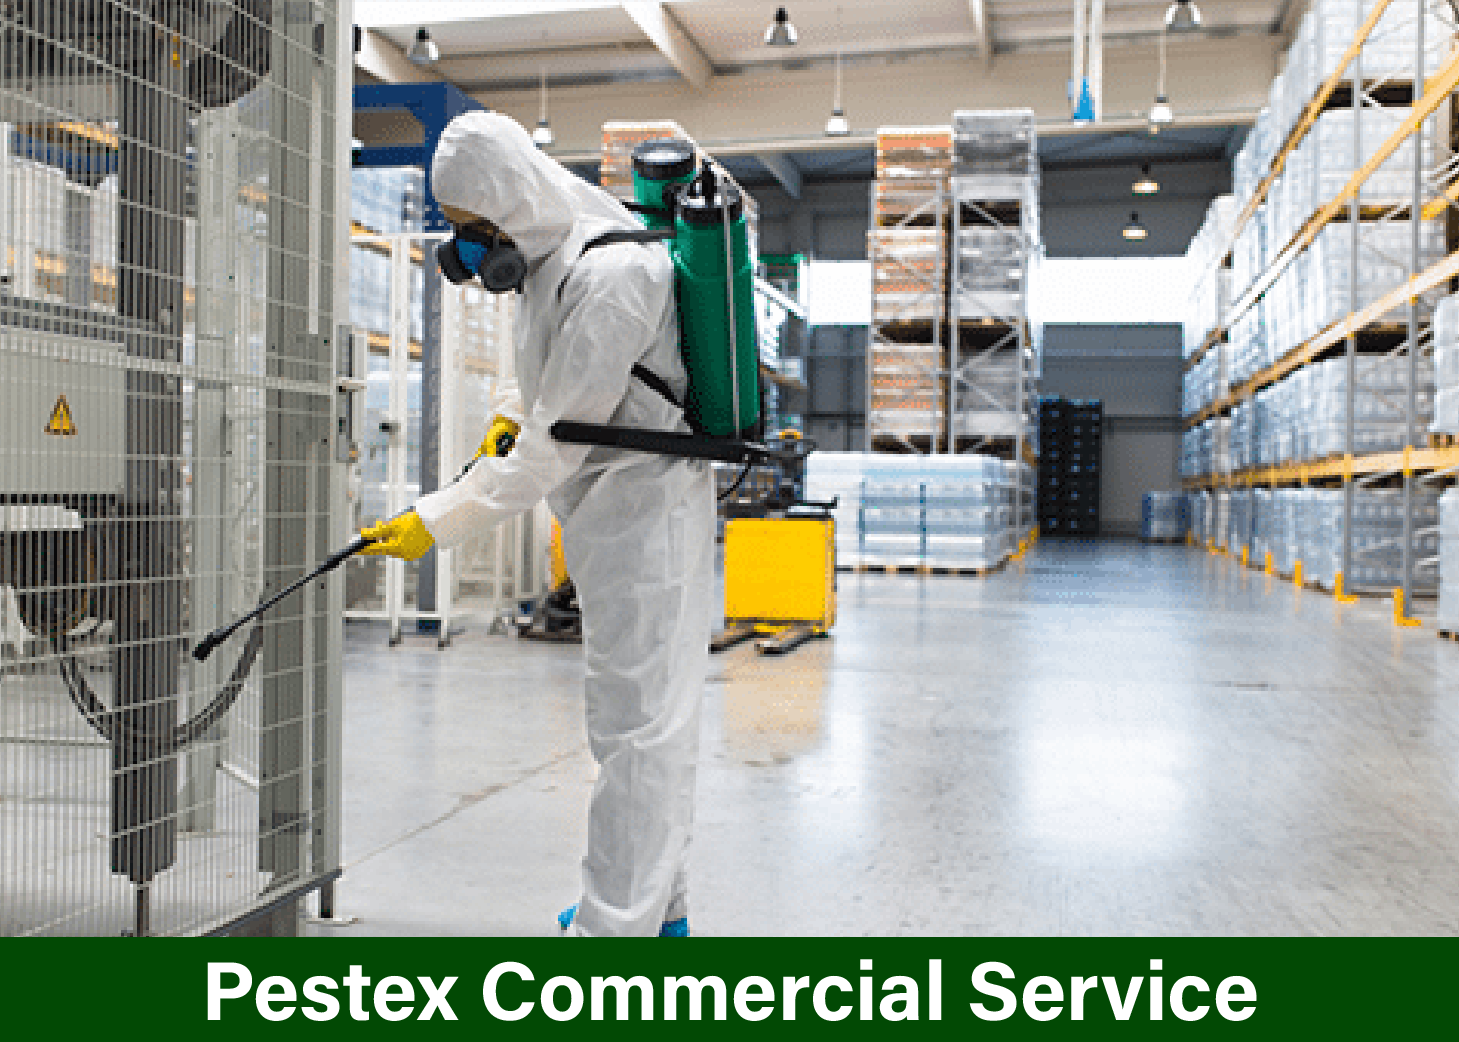 Pestex Commercial Service